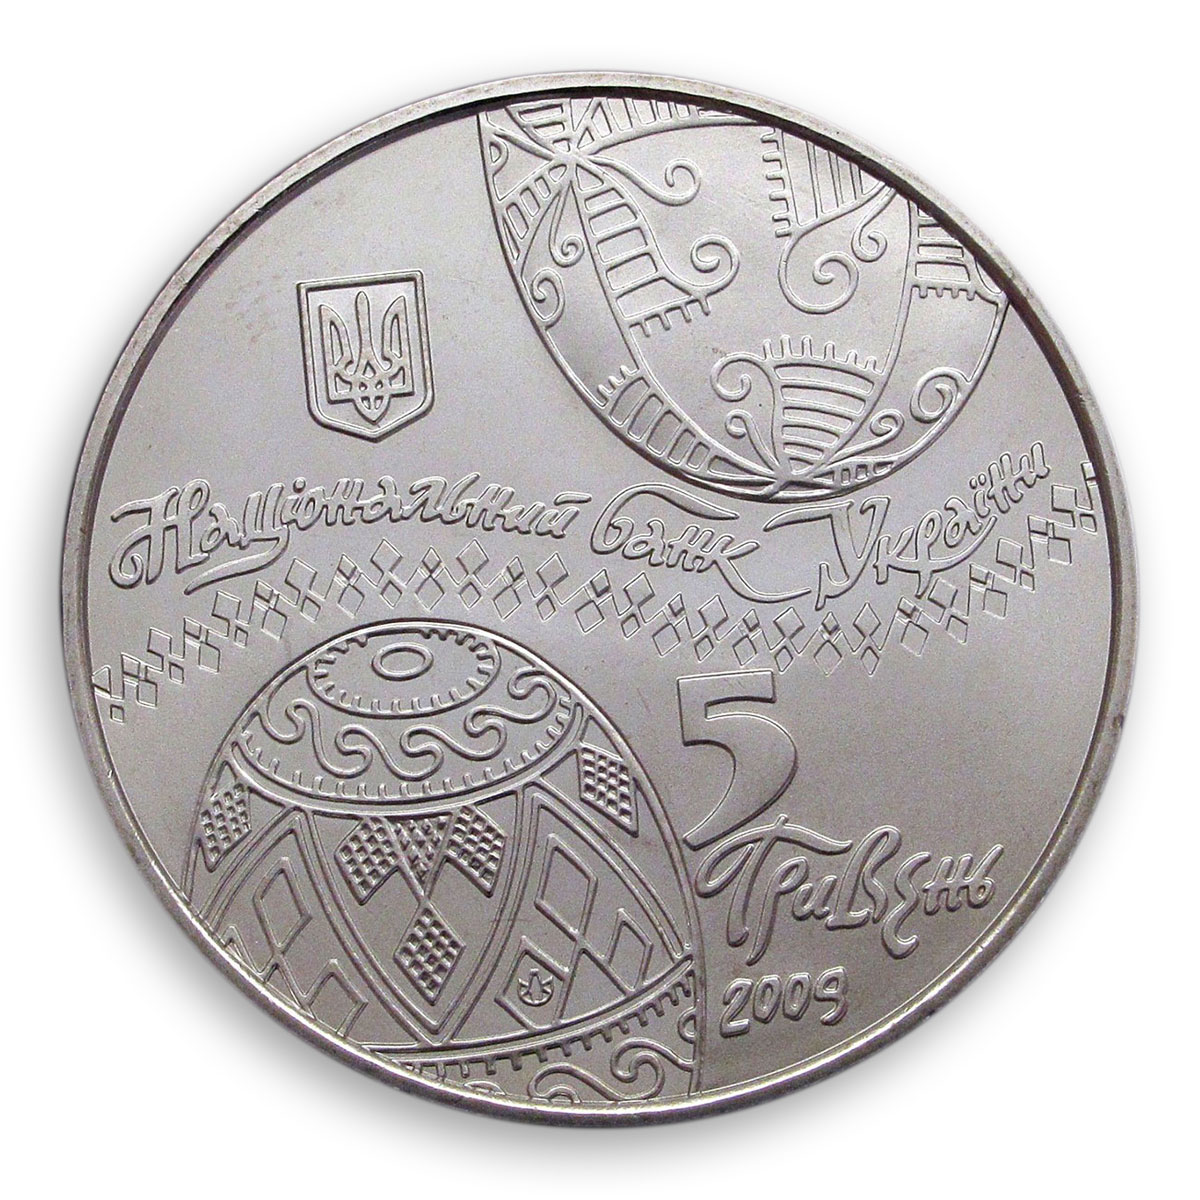 Ukraine 5 hryvnia Ukrainian Pysanka Easter egg decoration folk nickel coin 2009